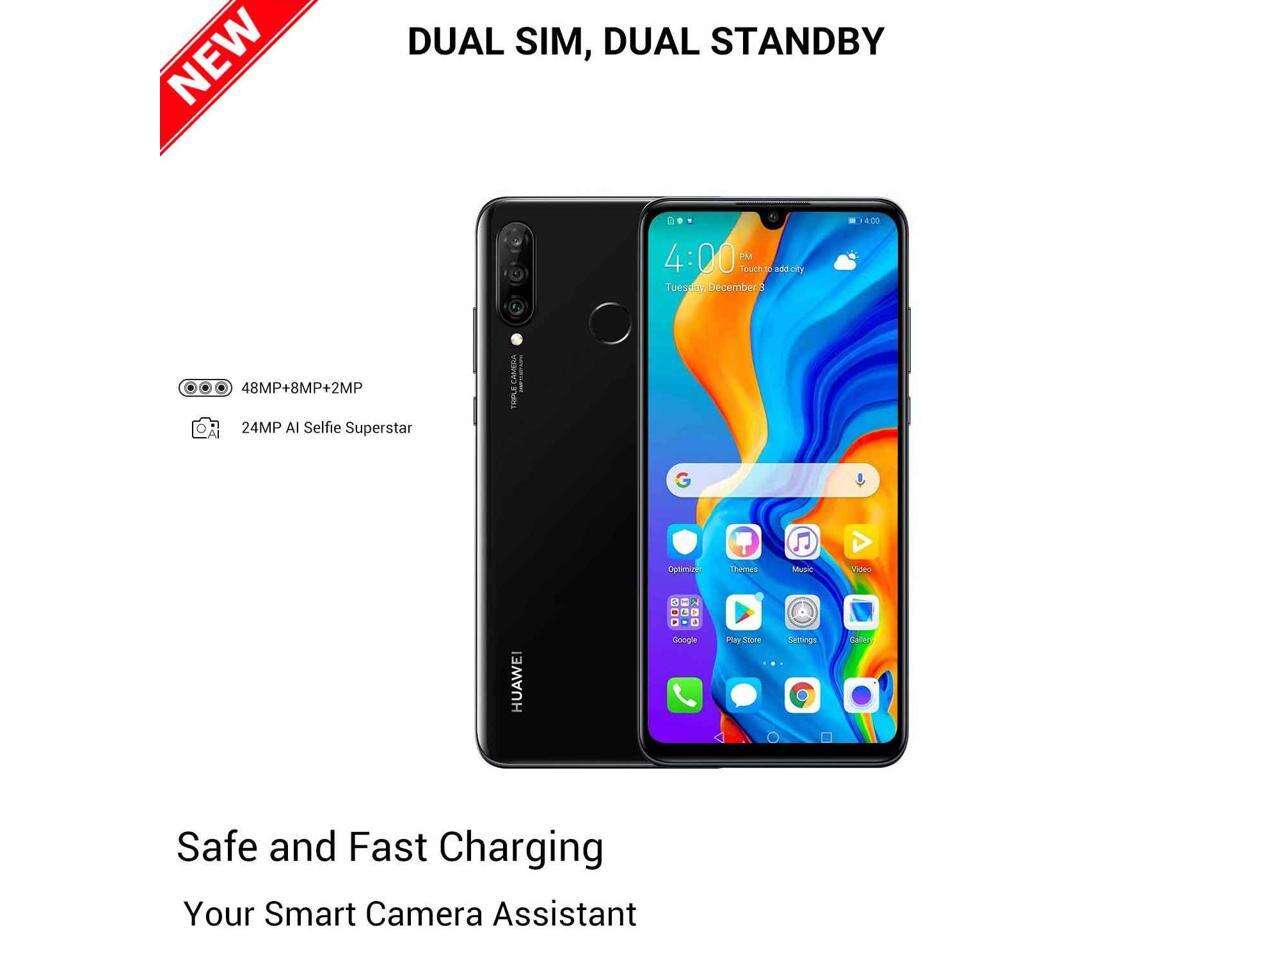 Huawei P30 Lite 128GB MAR-LX2 Dual SIM GSM Factory Unlocked 4G LTE 6.15" Display 6GB RAM Kirin 710 Octa Core, AI Triple Camera,32MP Selfie Camera Smartphone - Midnight Black - International Version